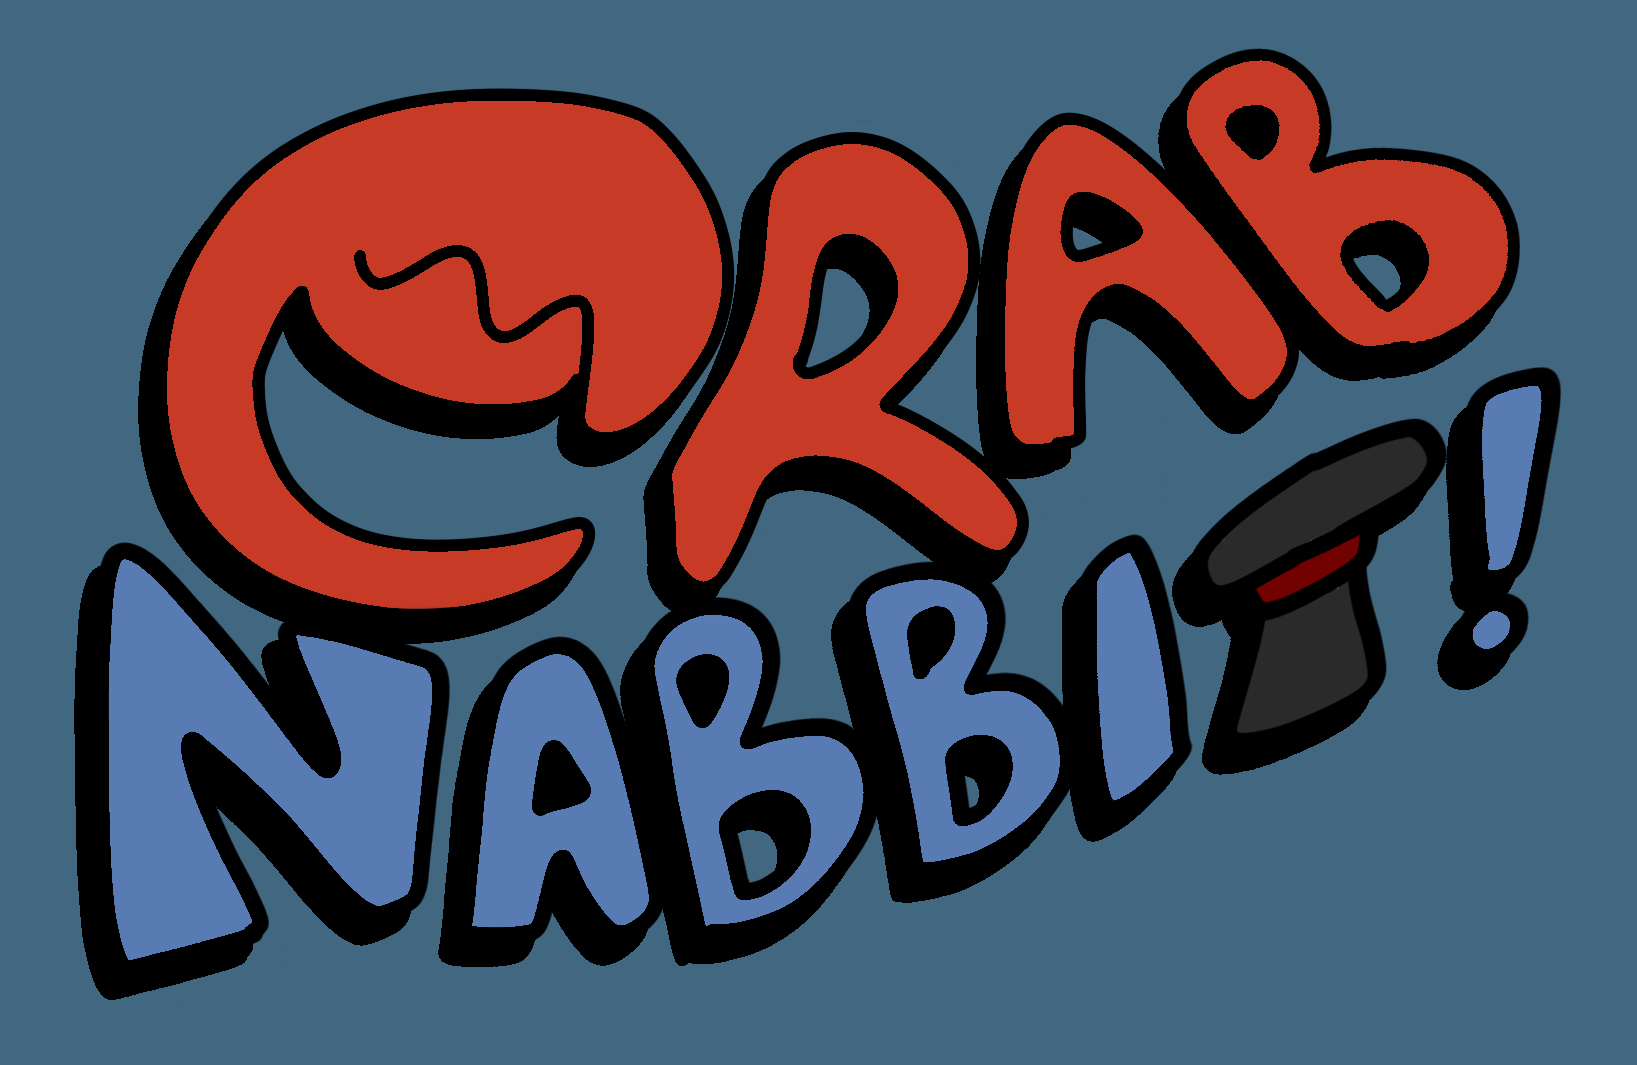 Crab Nabbit!